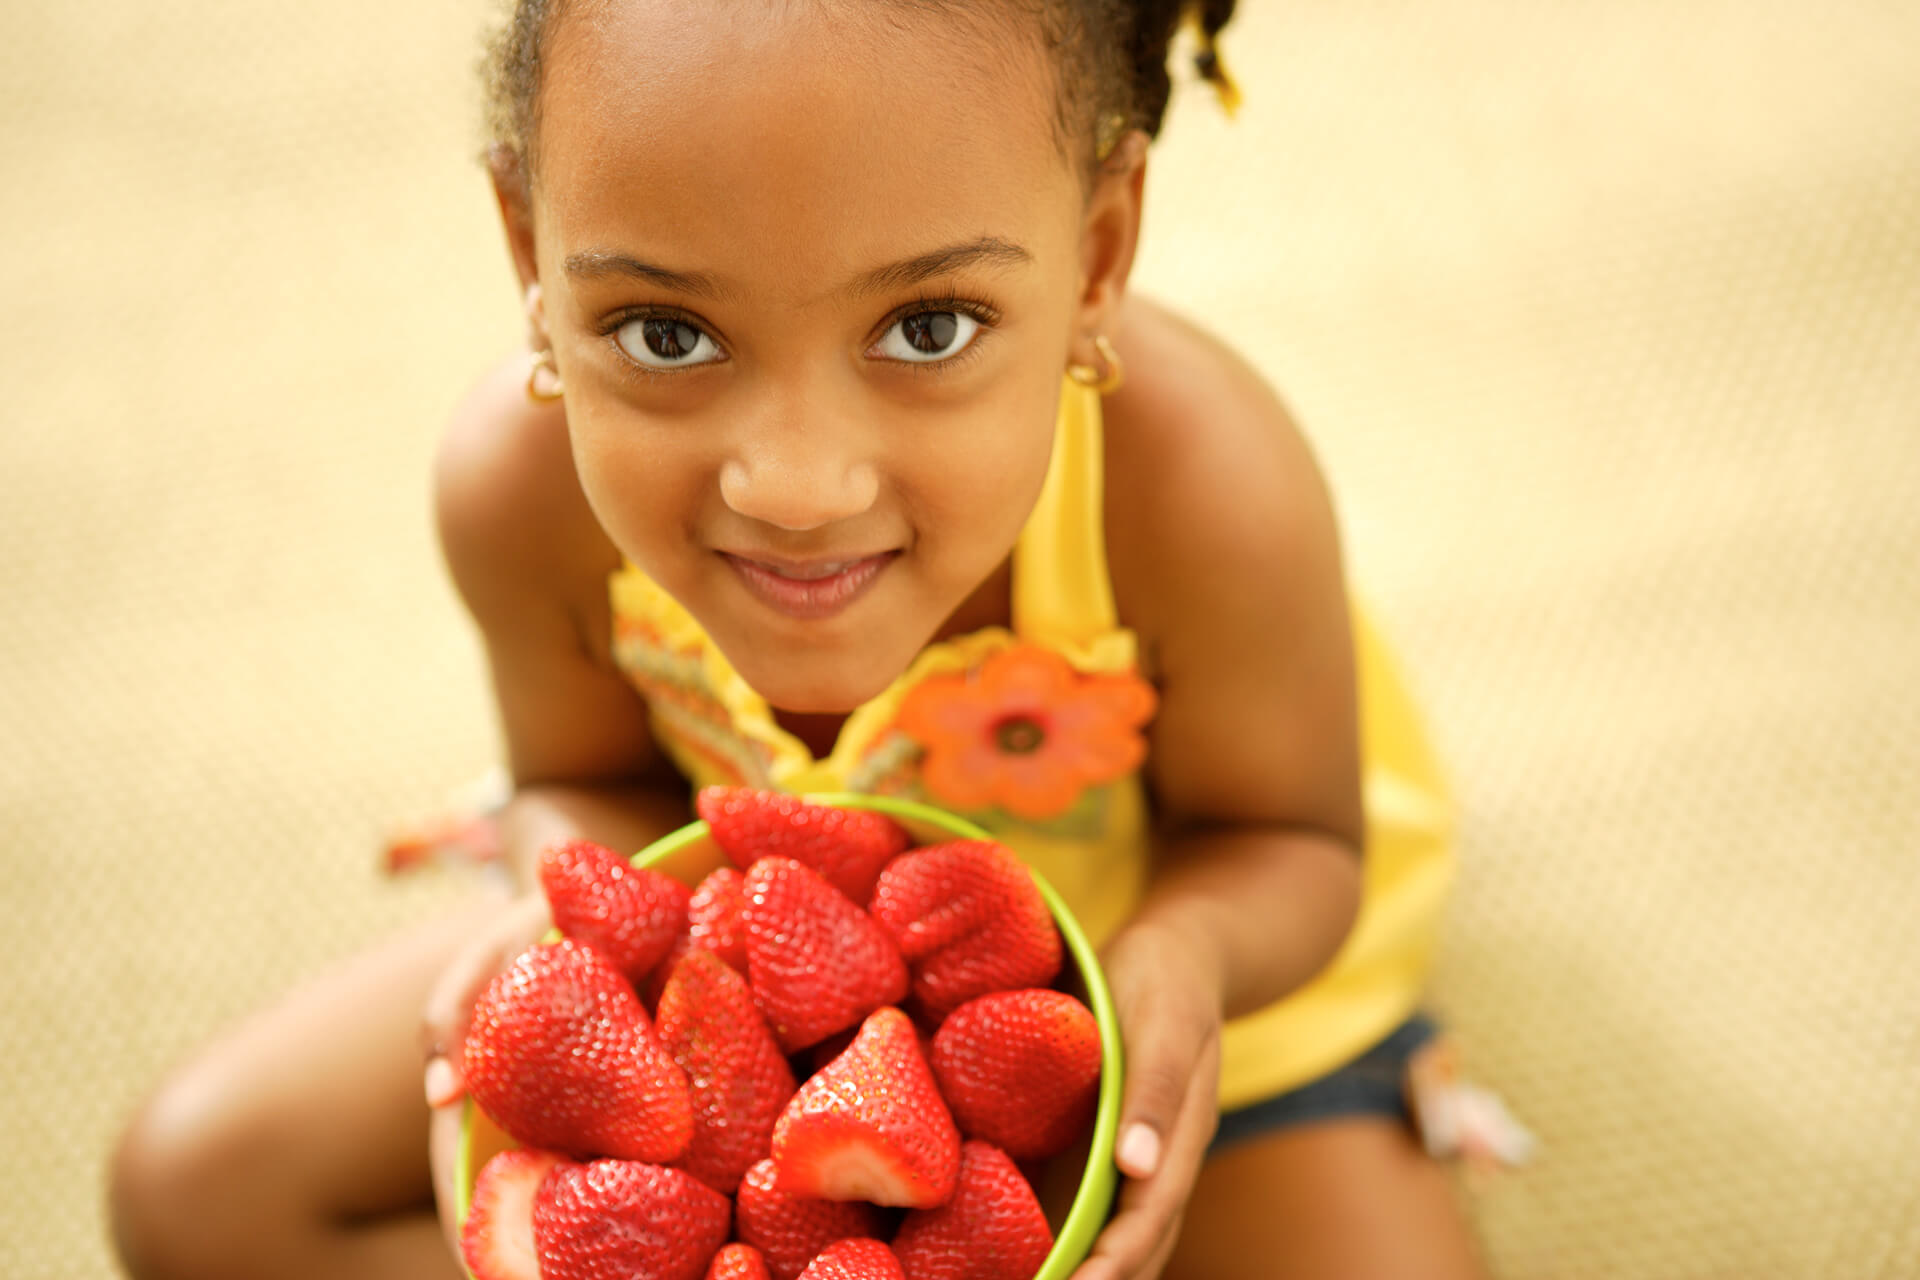 Healthy Eating for Children